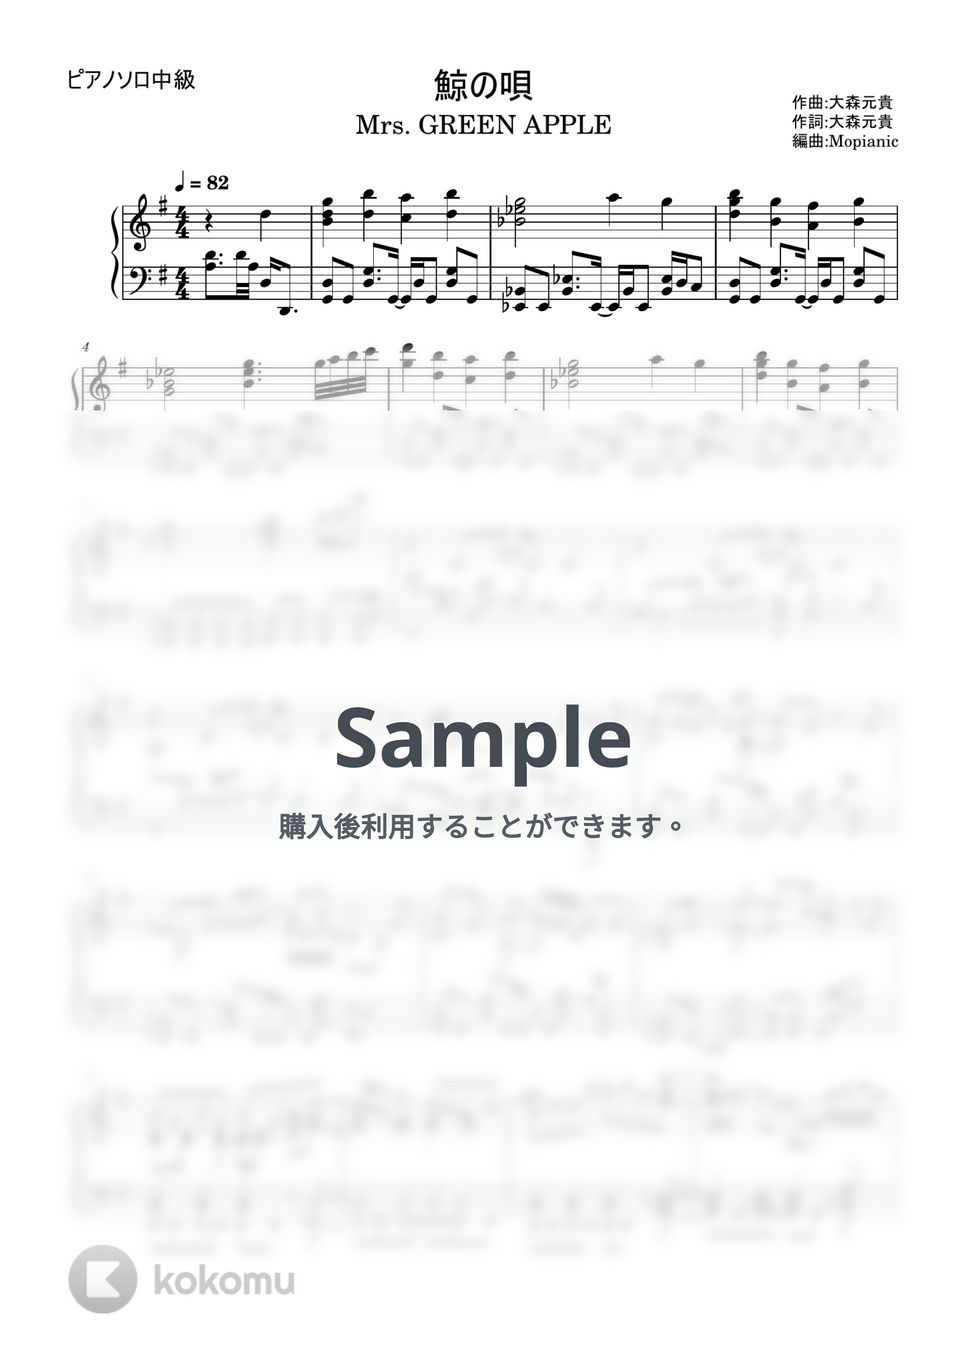 Mrs, GREEN APPLE - Kujira no Uta (intermediate, piano) by Mopianic